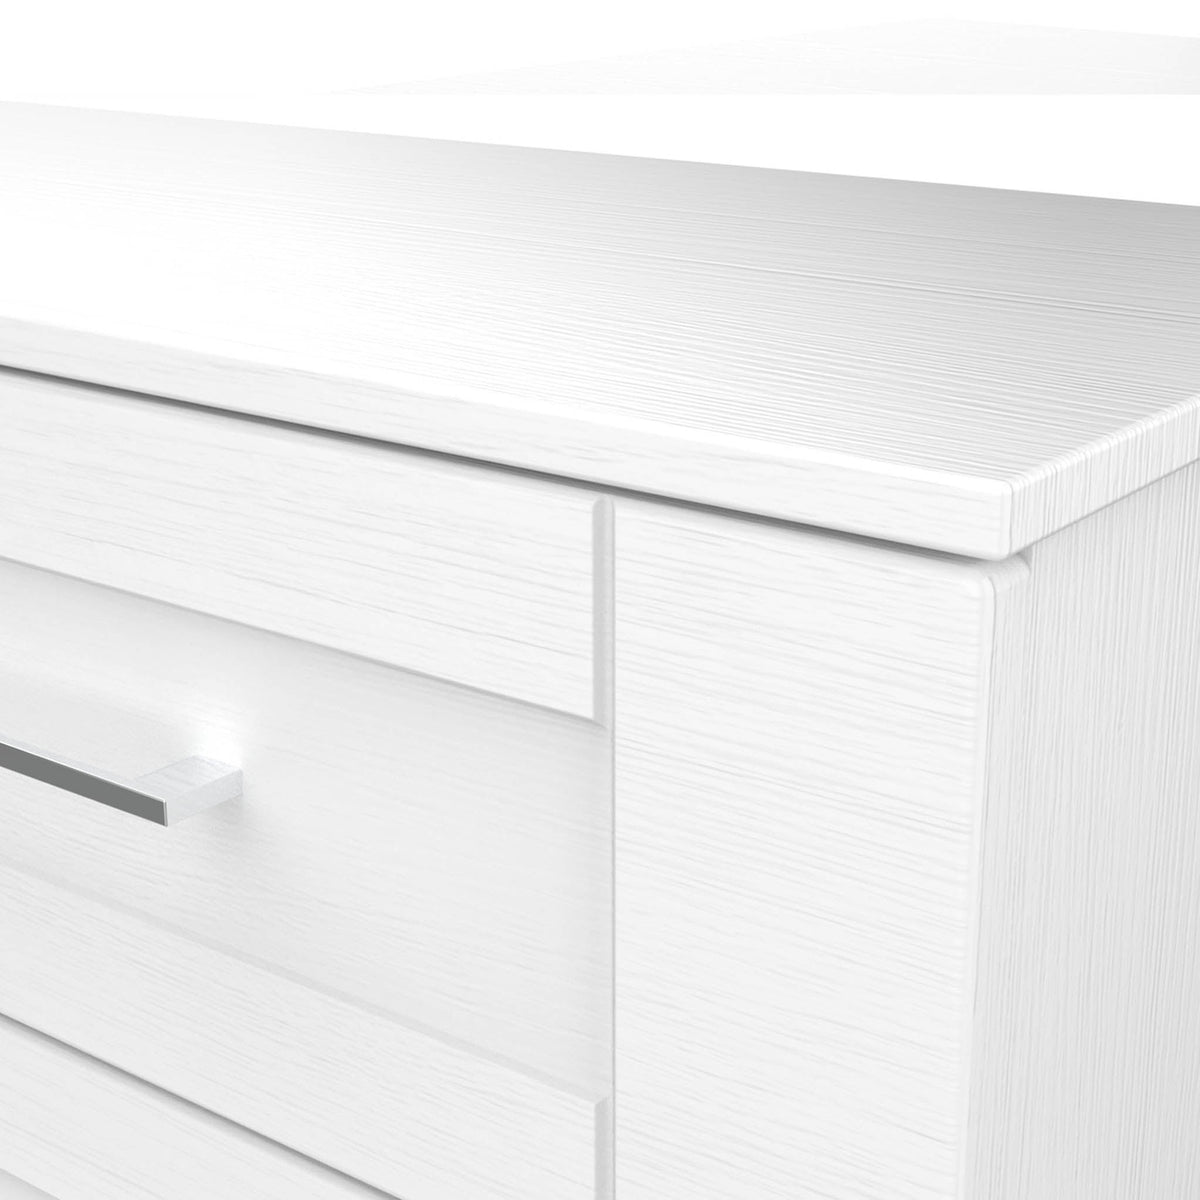 Bellamy White 2 Drawer Bedside Table Cabinet wood grain finish